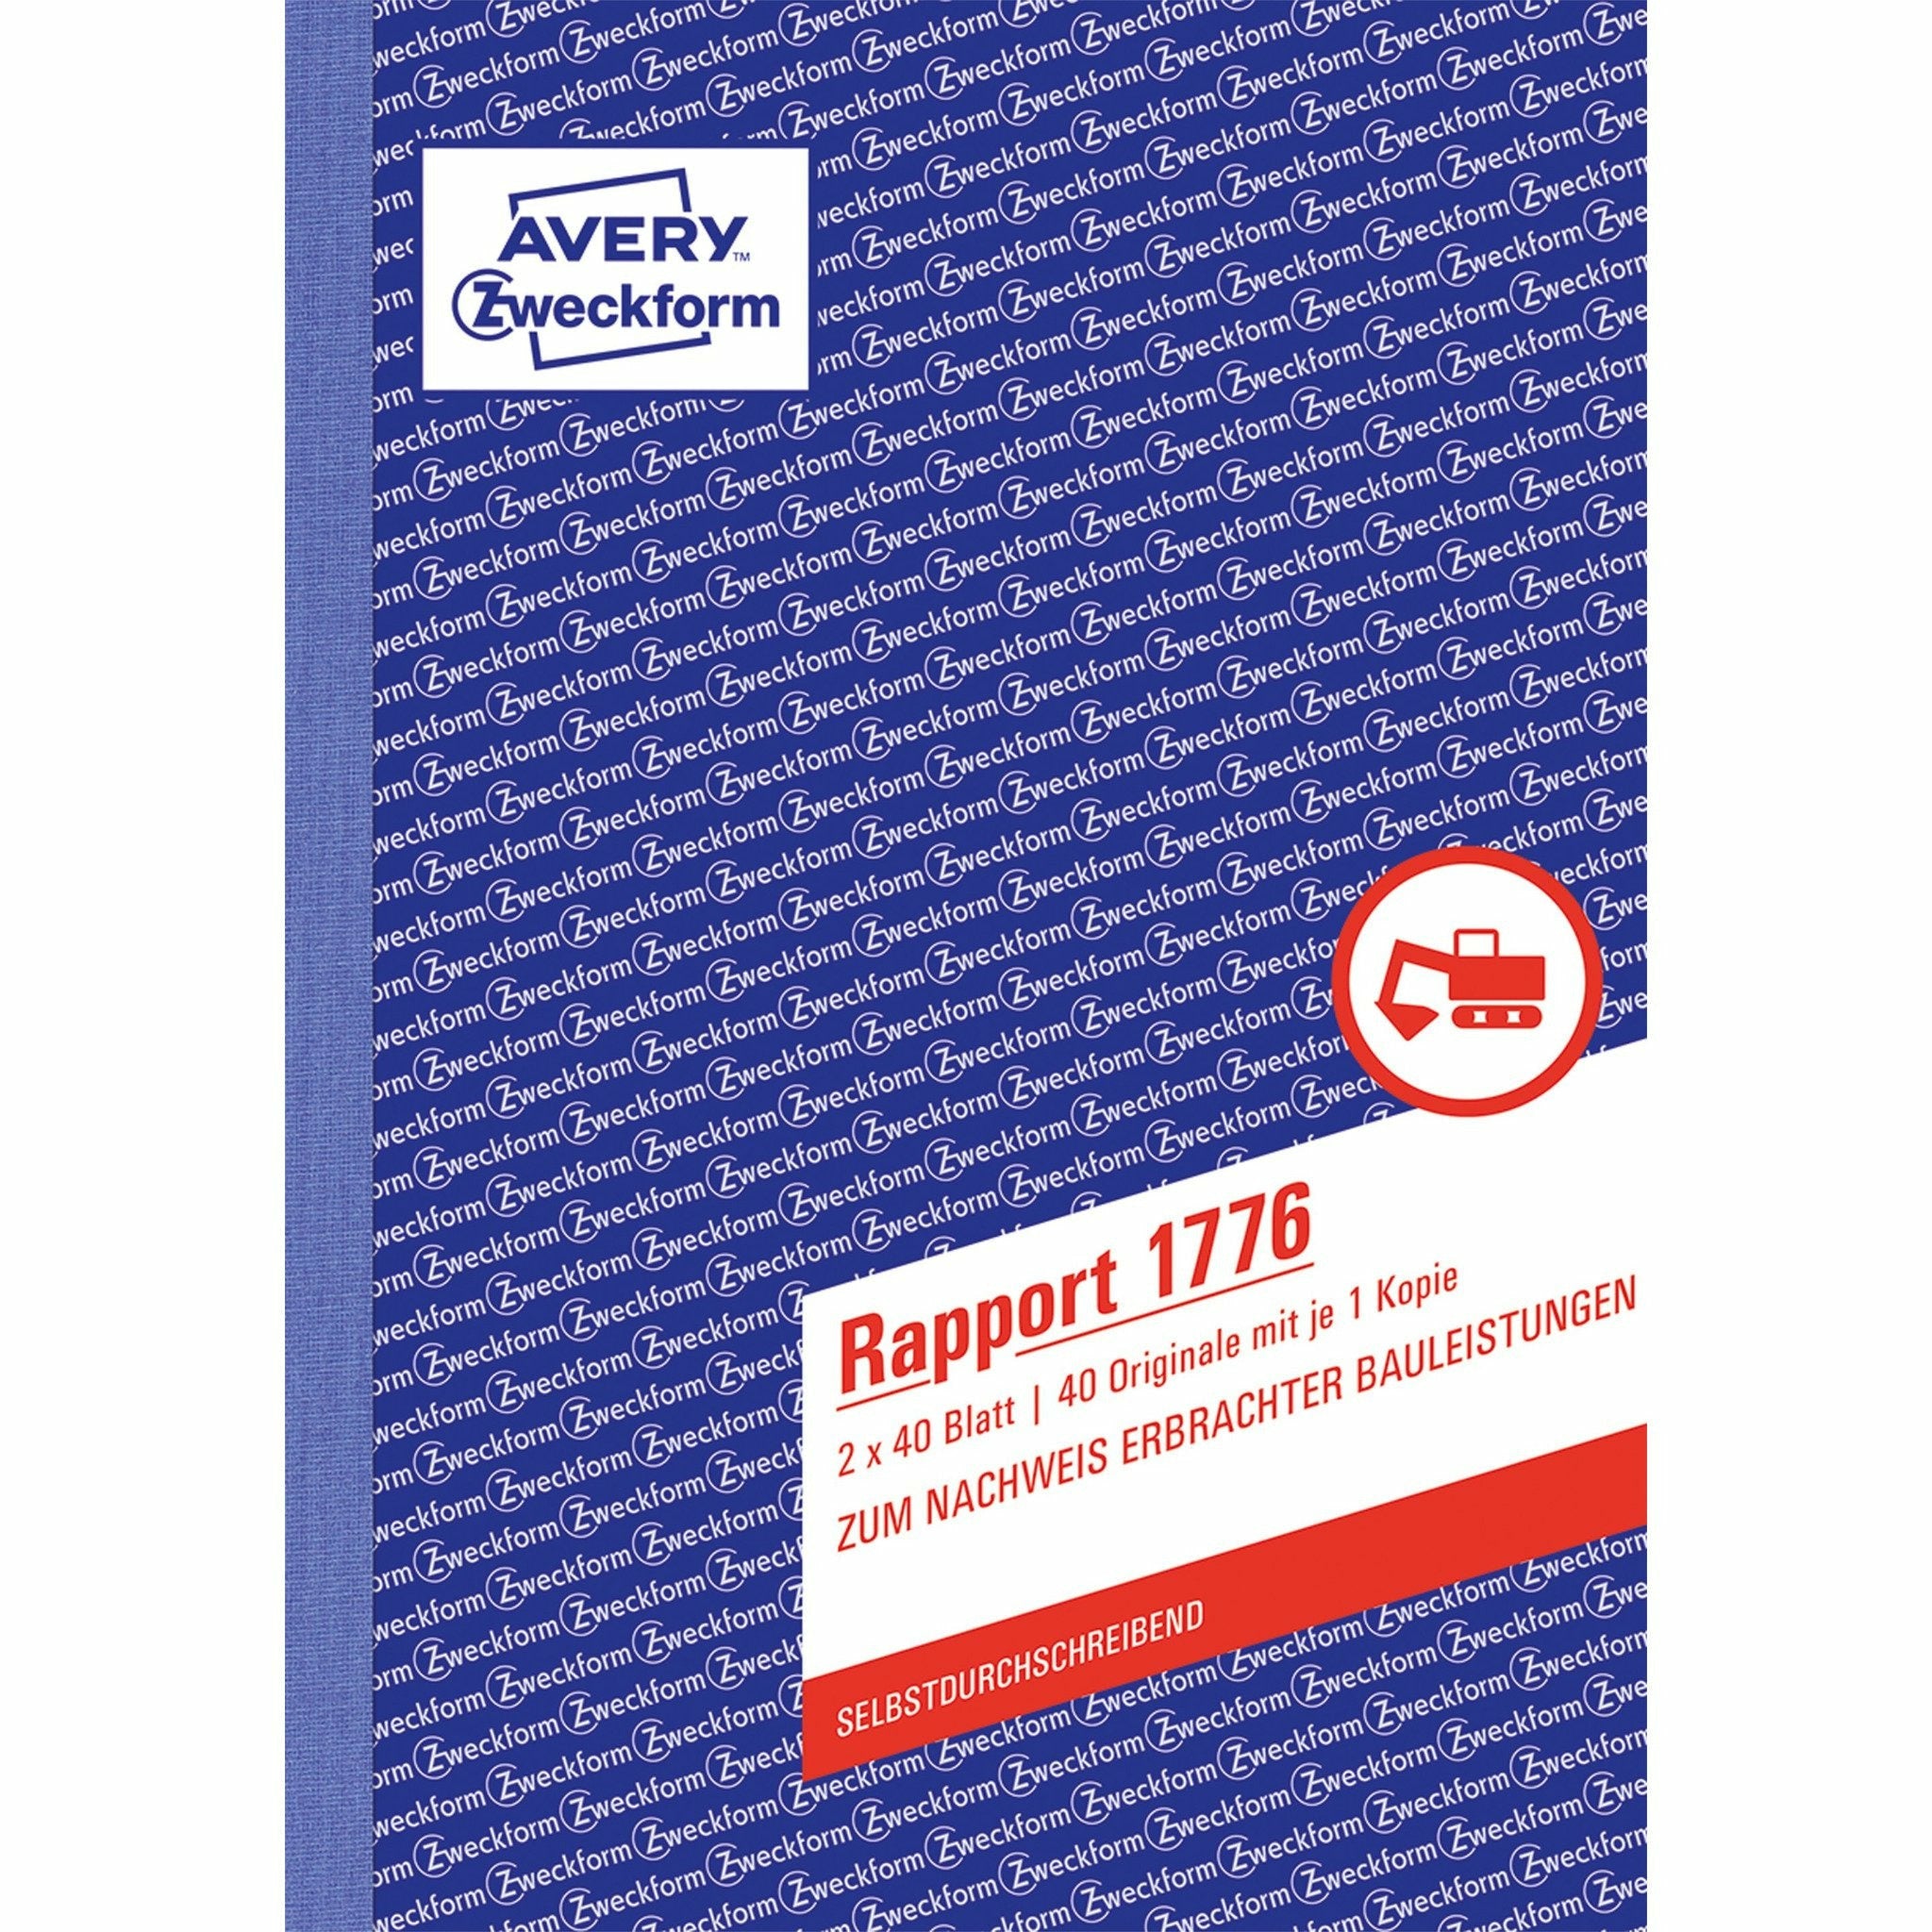 Avery-Zweckform | Rapport | 1776